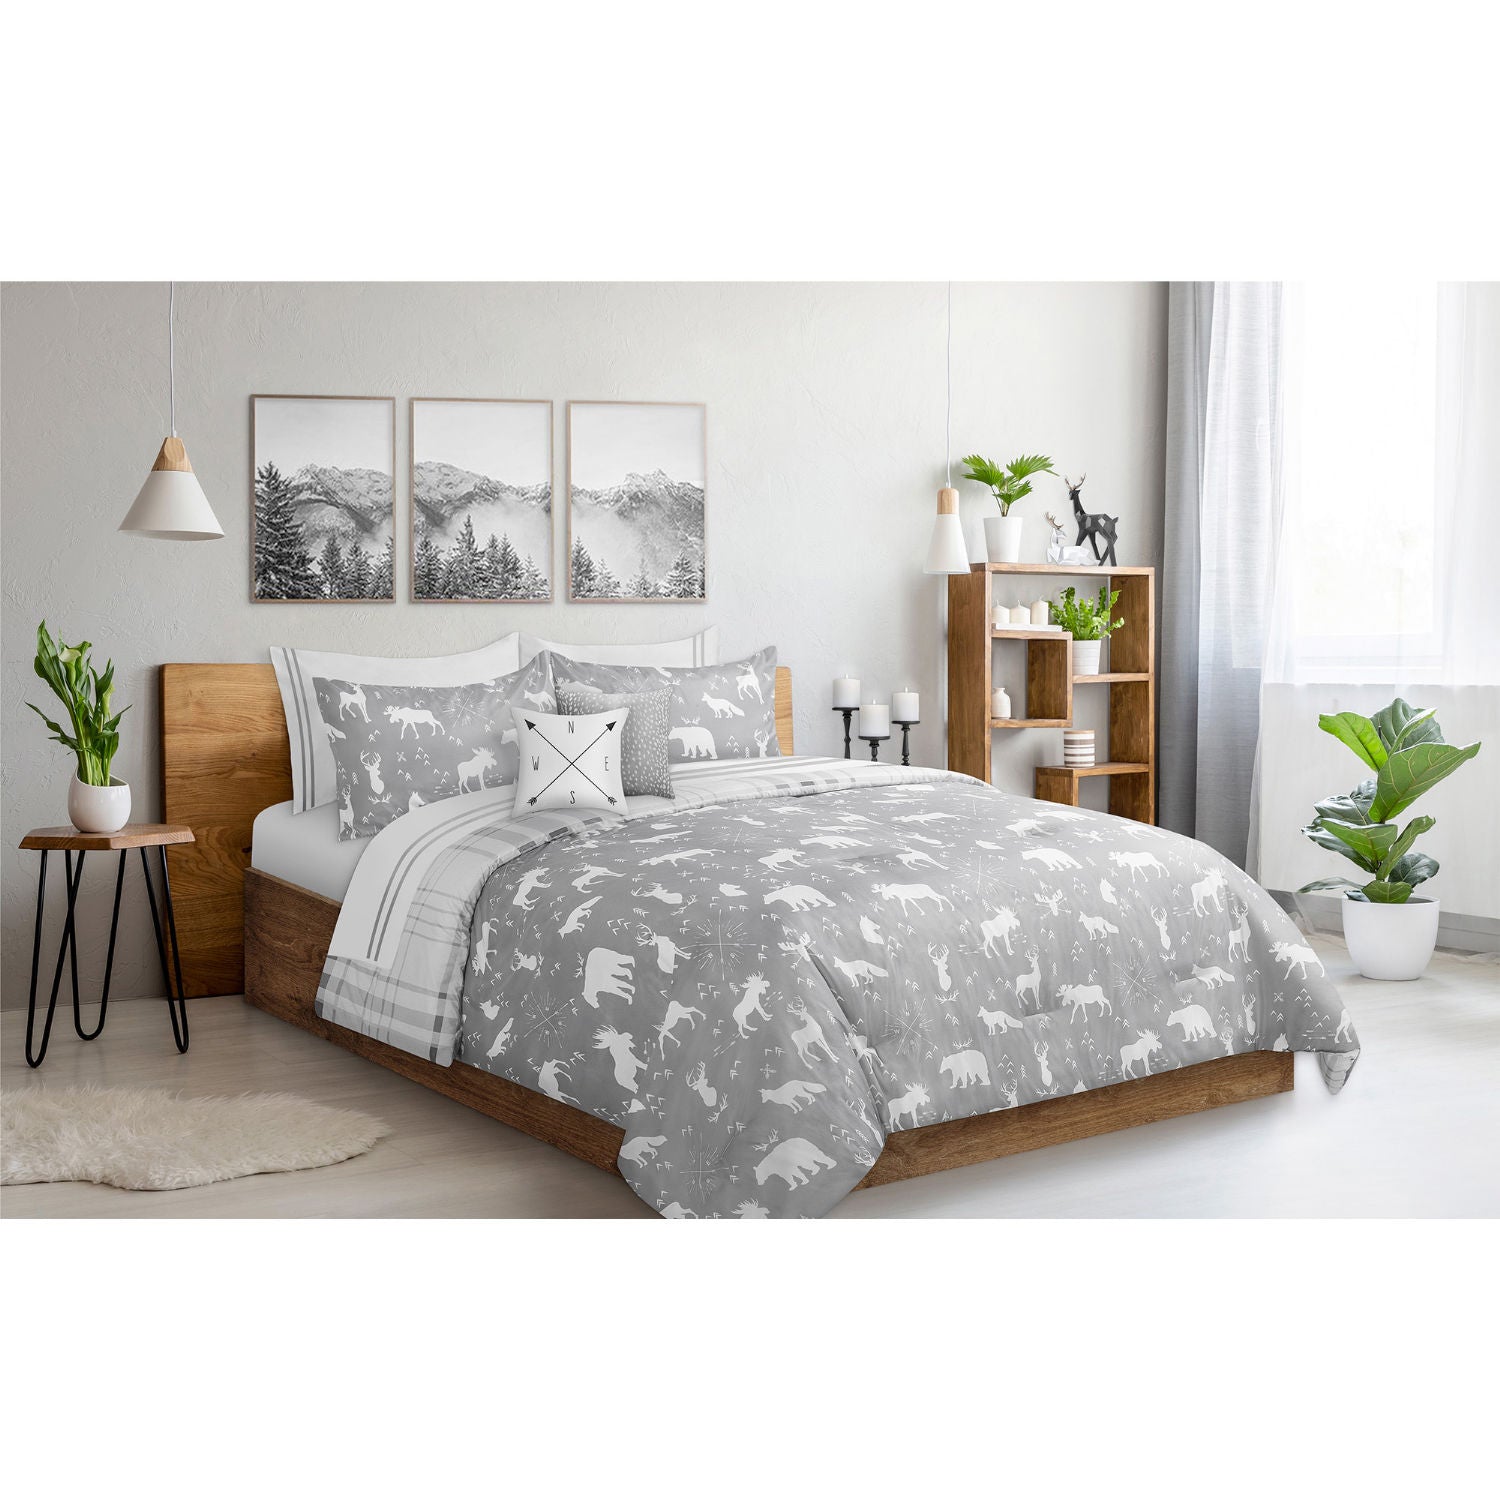 Woven Reversible/Comforter 3 Piece Set King Grey Wildlife